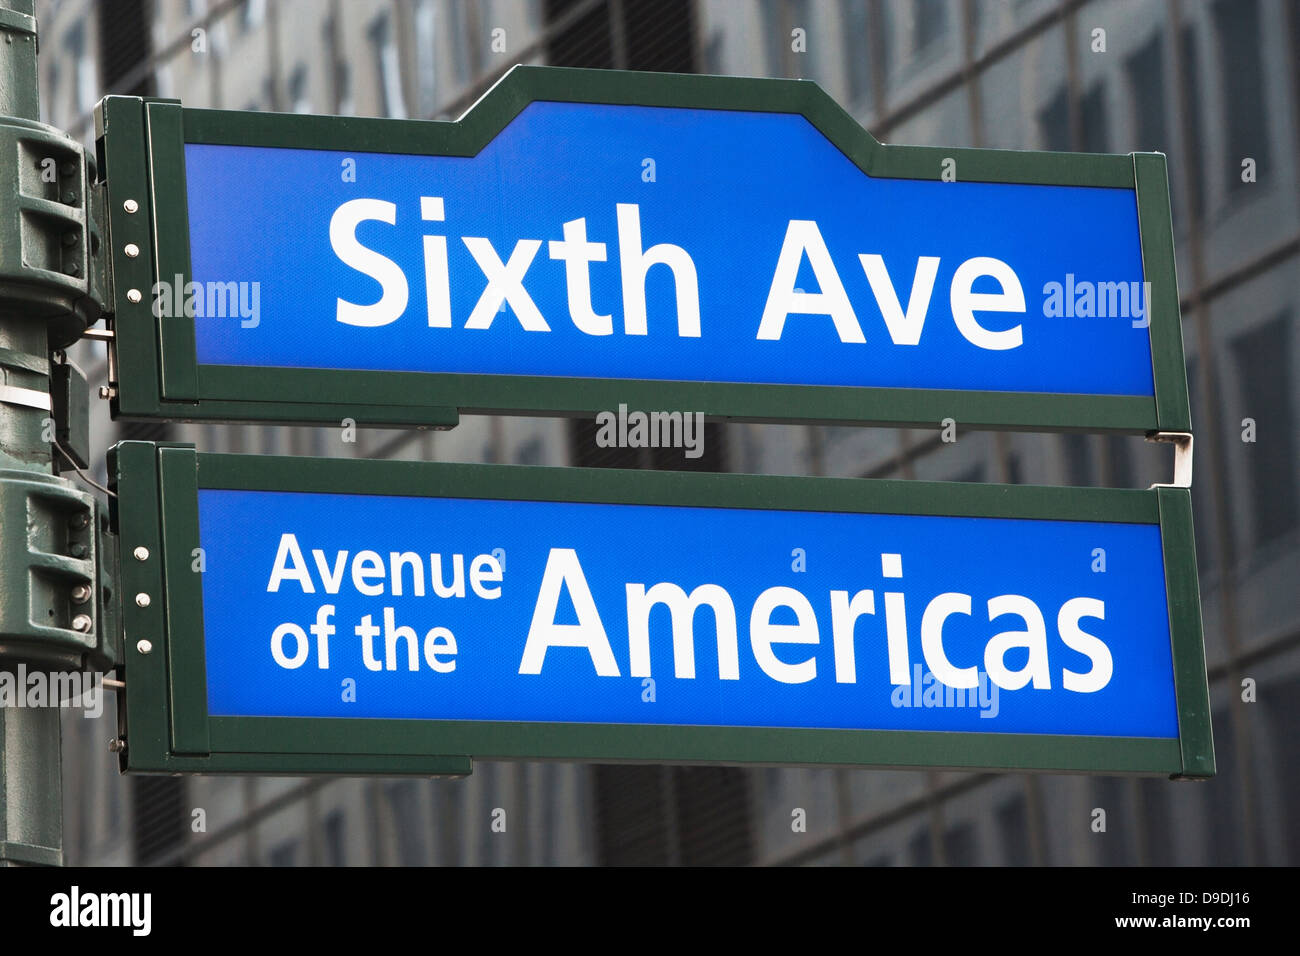 Sixth Avenue street sign, New York City, USA Stock Photo